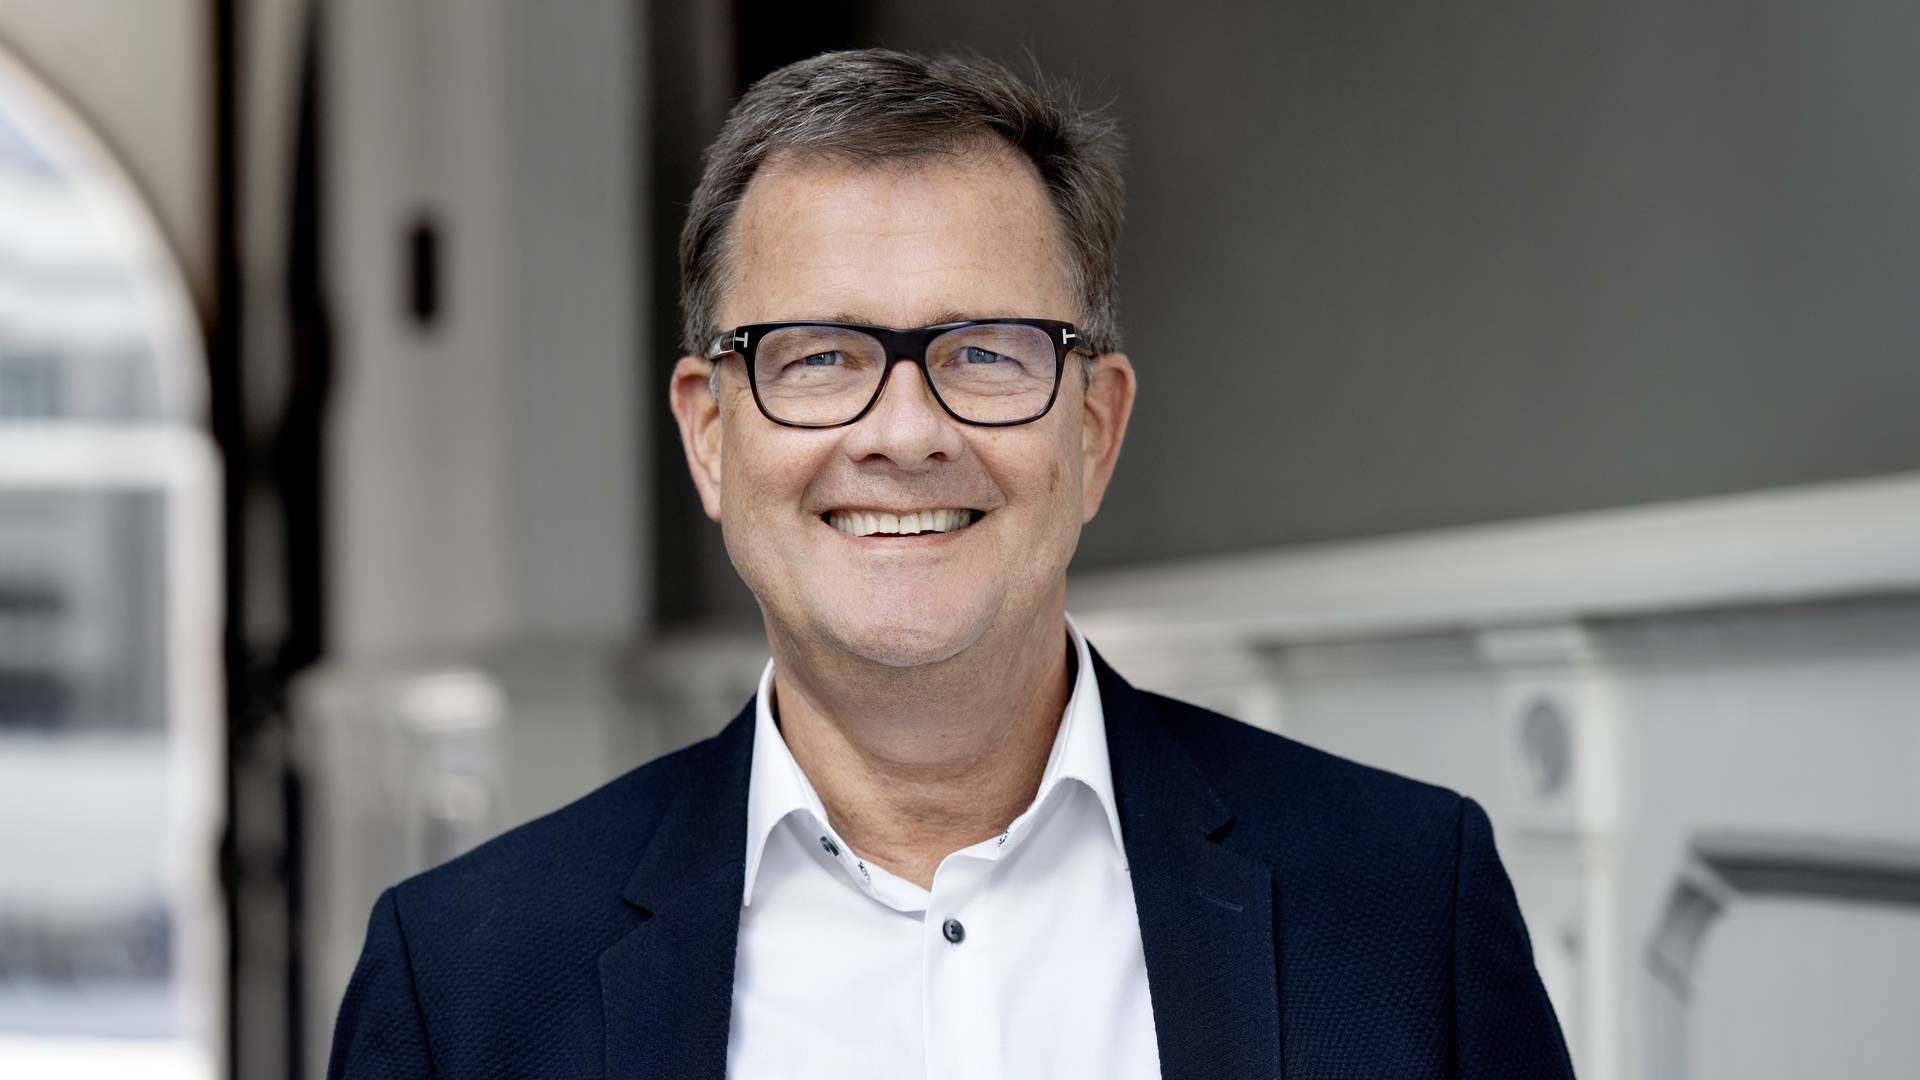 Ny database skal hjælpe banker med at bekæmpe hvidvask, hvis det står til Finans Danmark, fortæller organisationens juridiske direktør, Kjeld Gosvig-Jensen. | Foto: PR/ Finans Danmark